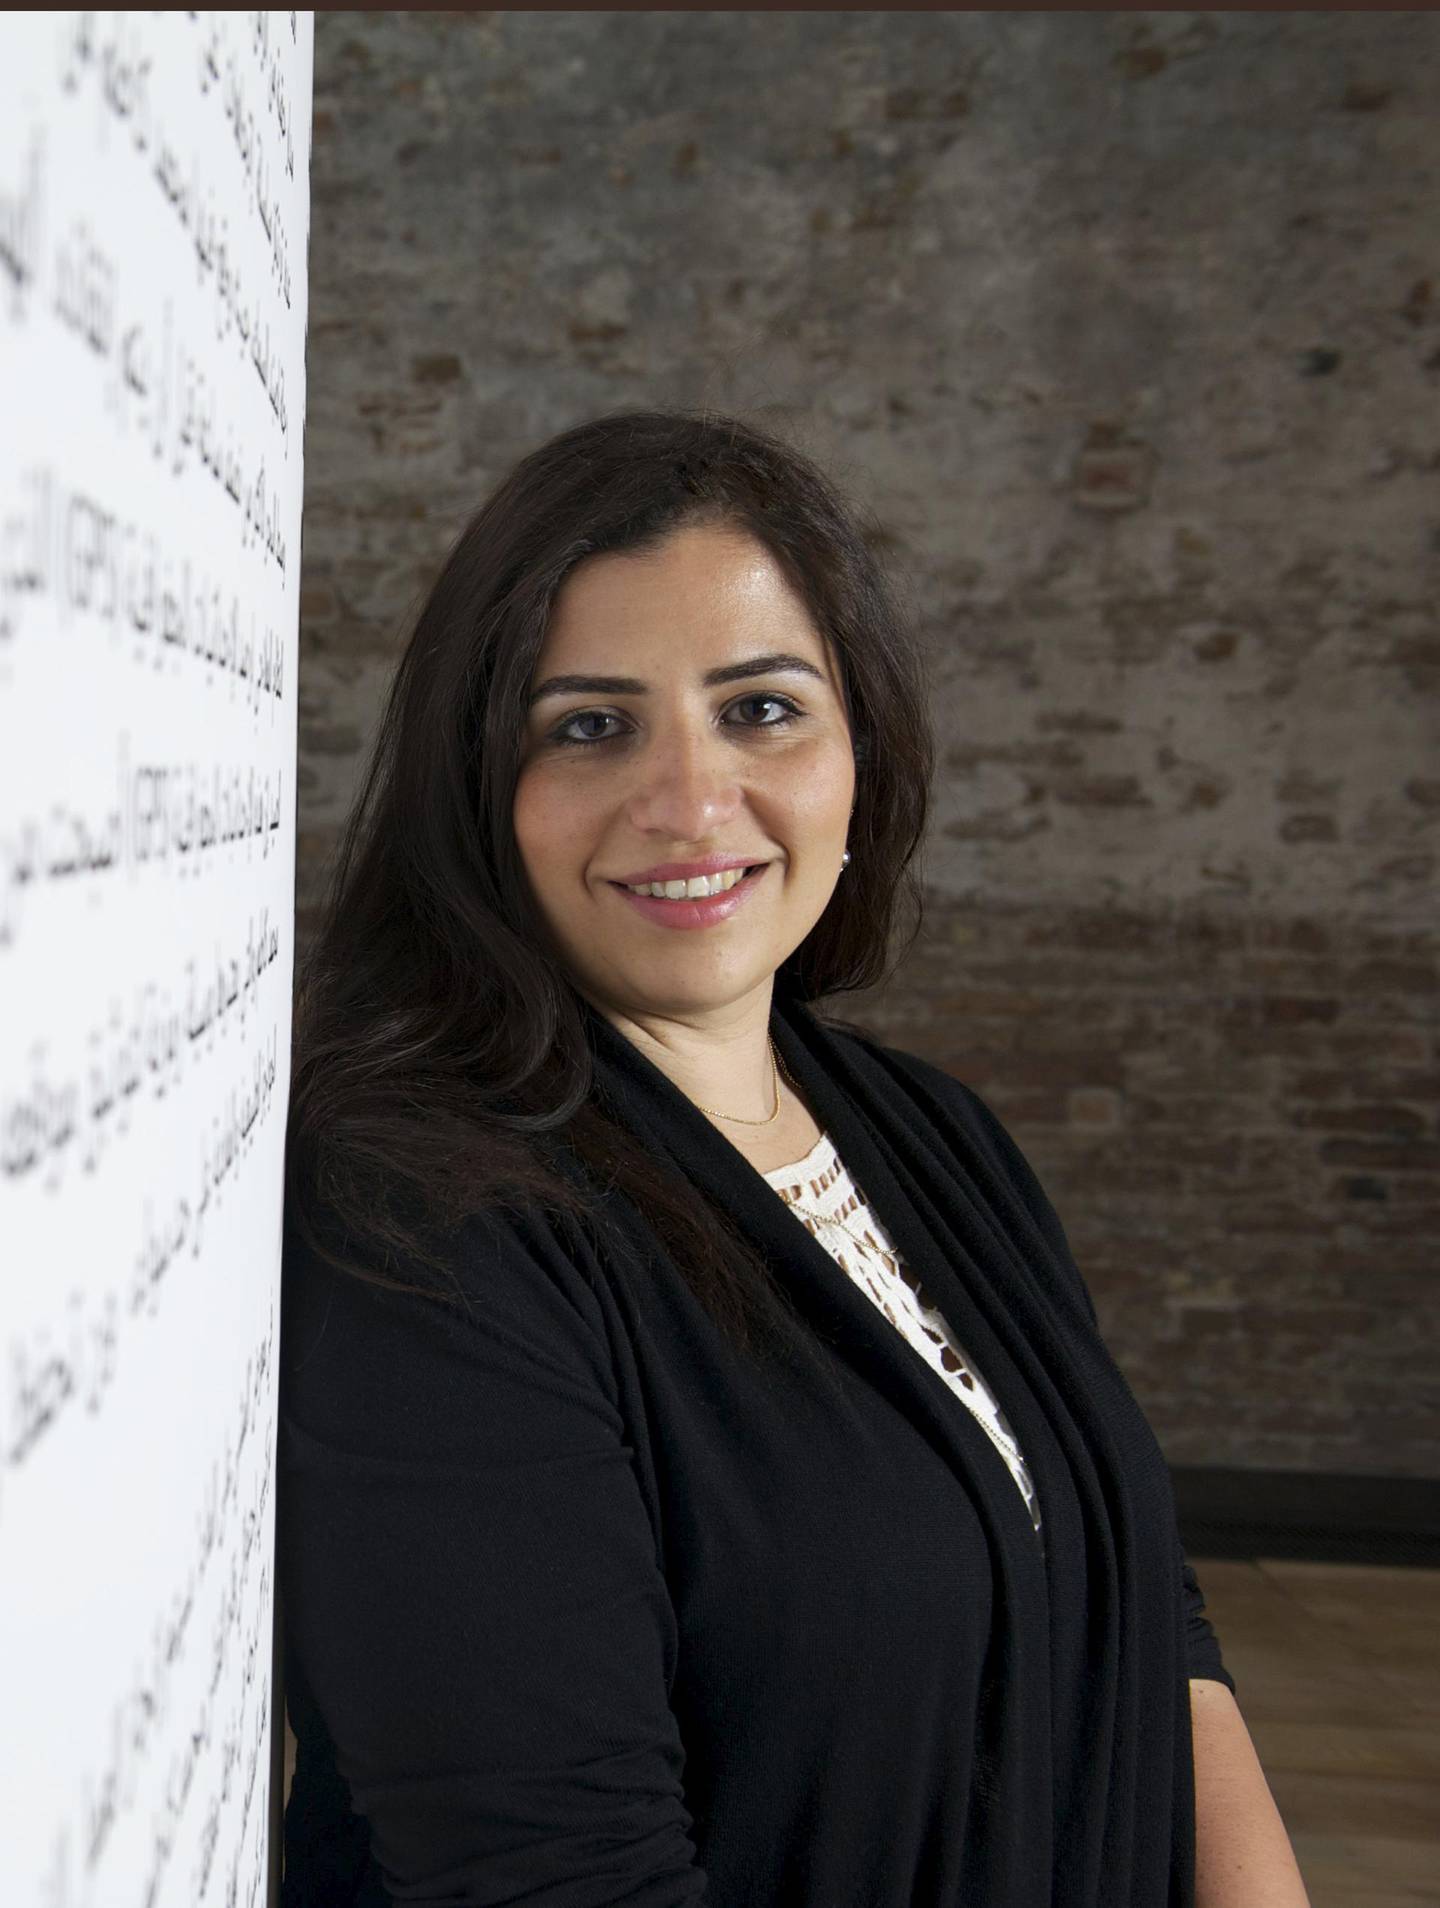 Reem Fadda of the Cultural Foundation. Sofia Dadourian